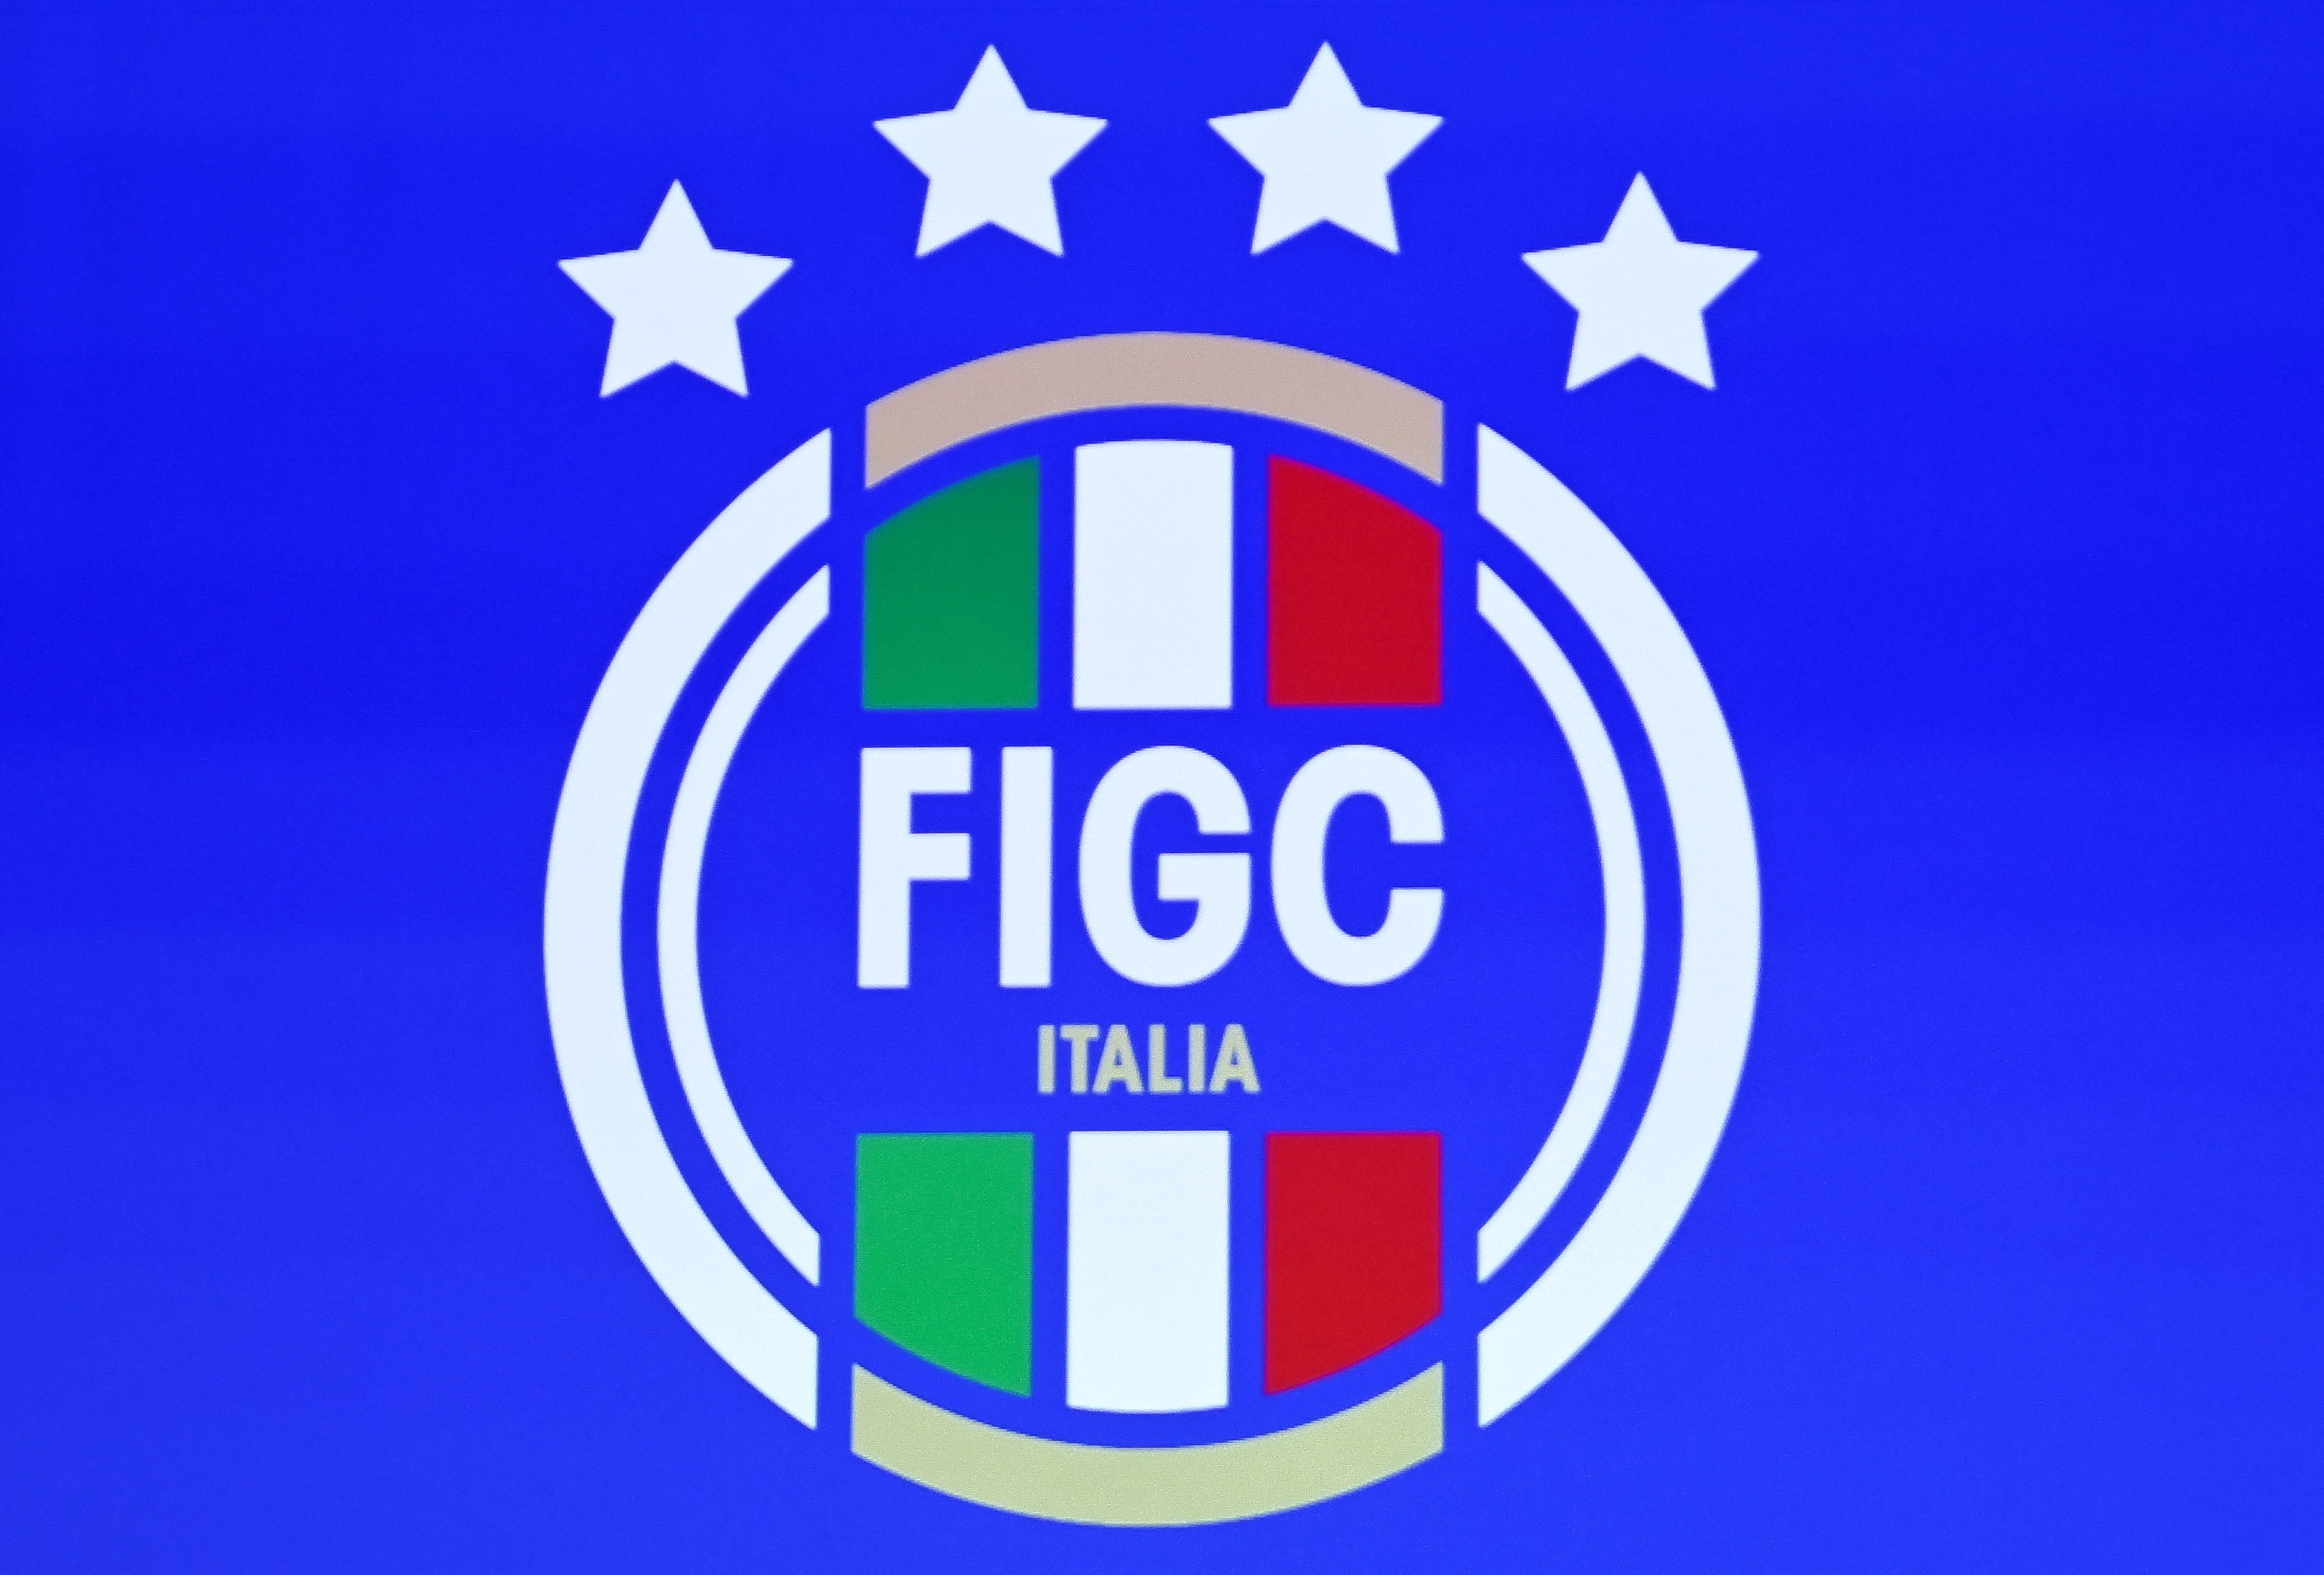 Italian Football Federation (FIGC) unveils its new logo